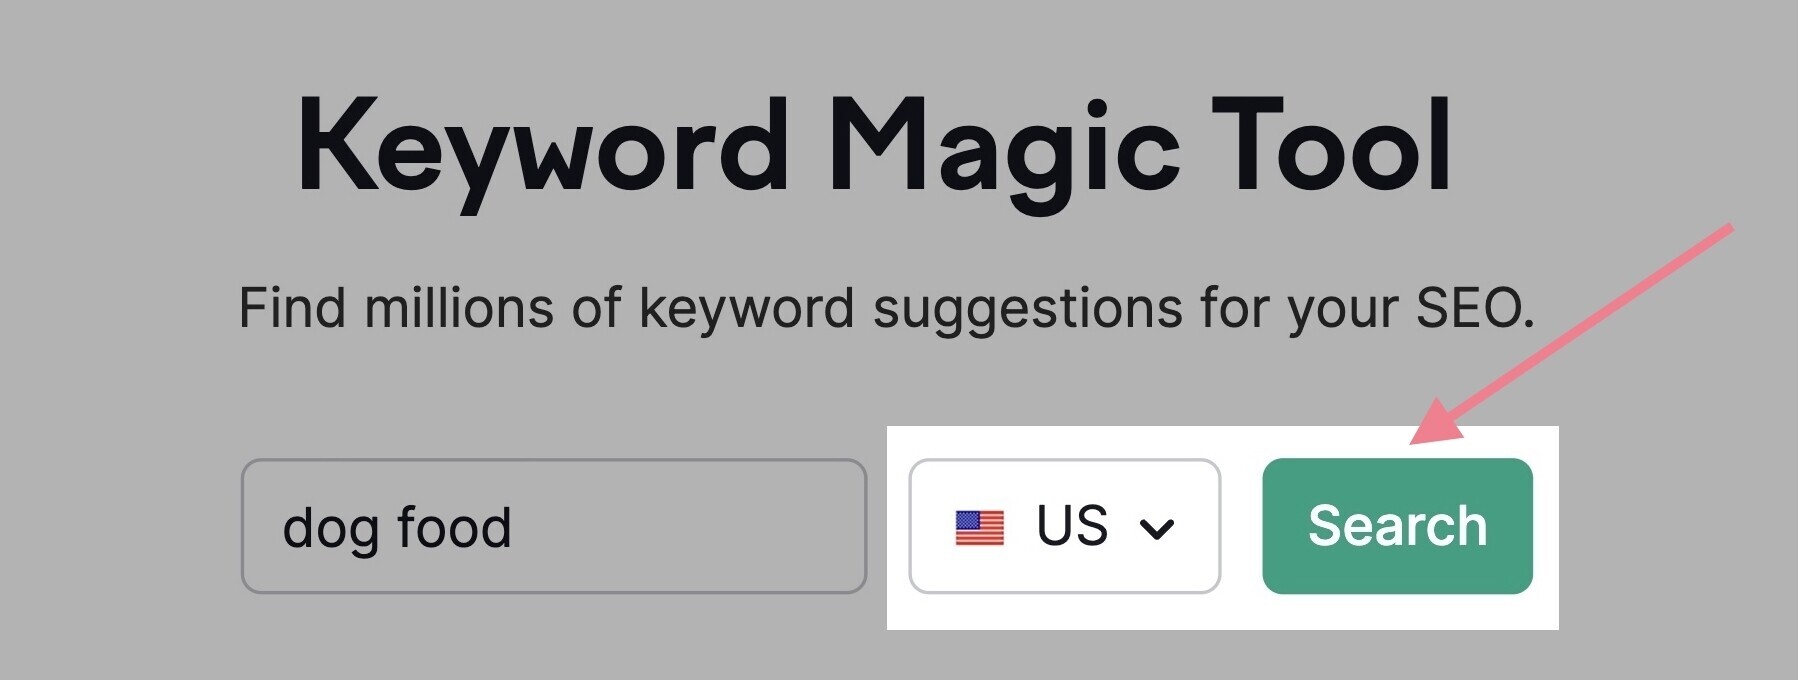 keyword magic tool search